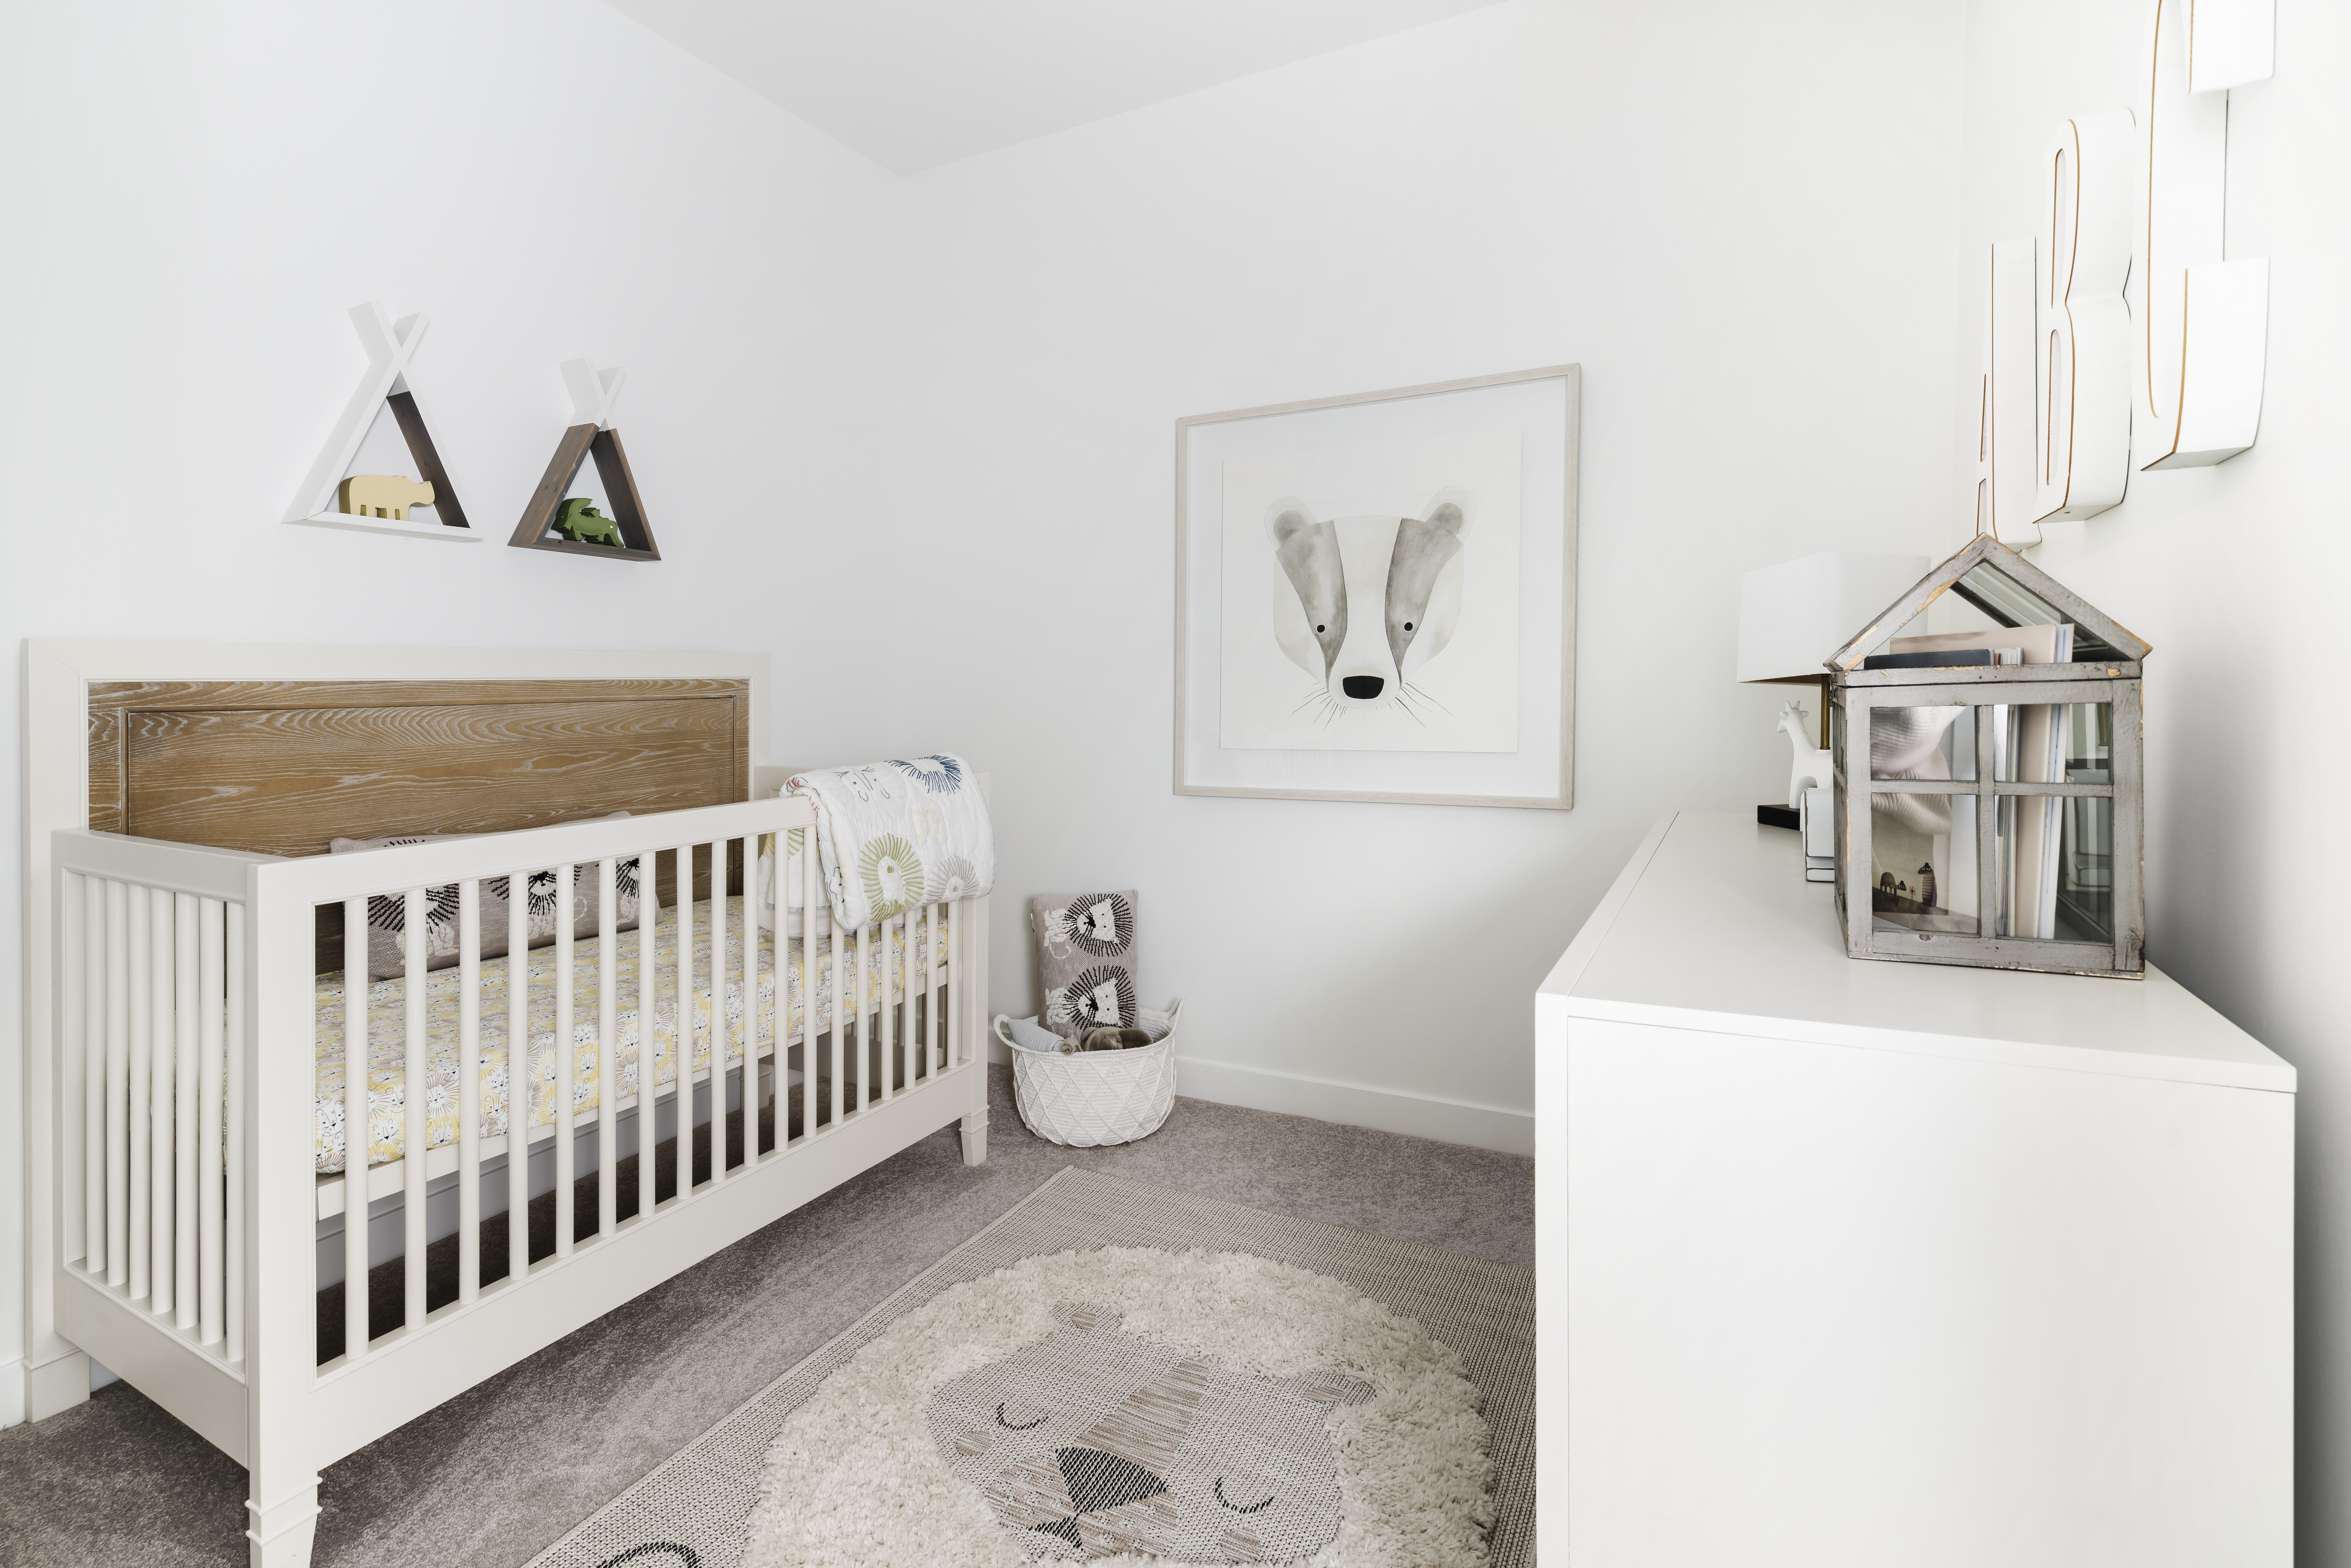 Nursery with crib and decor